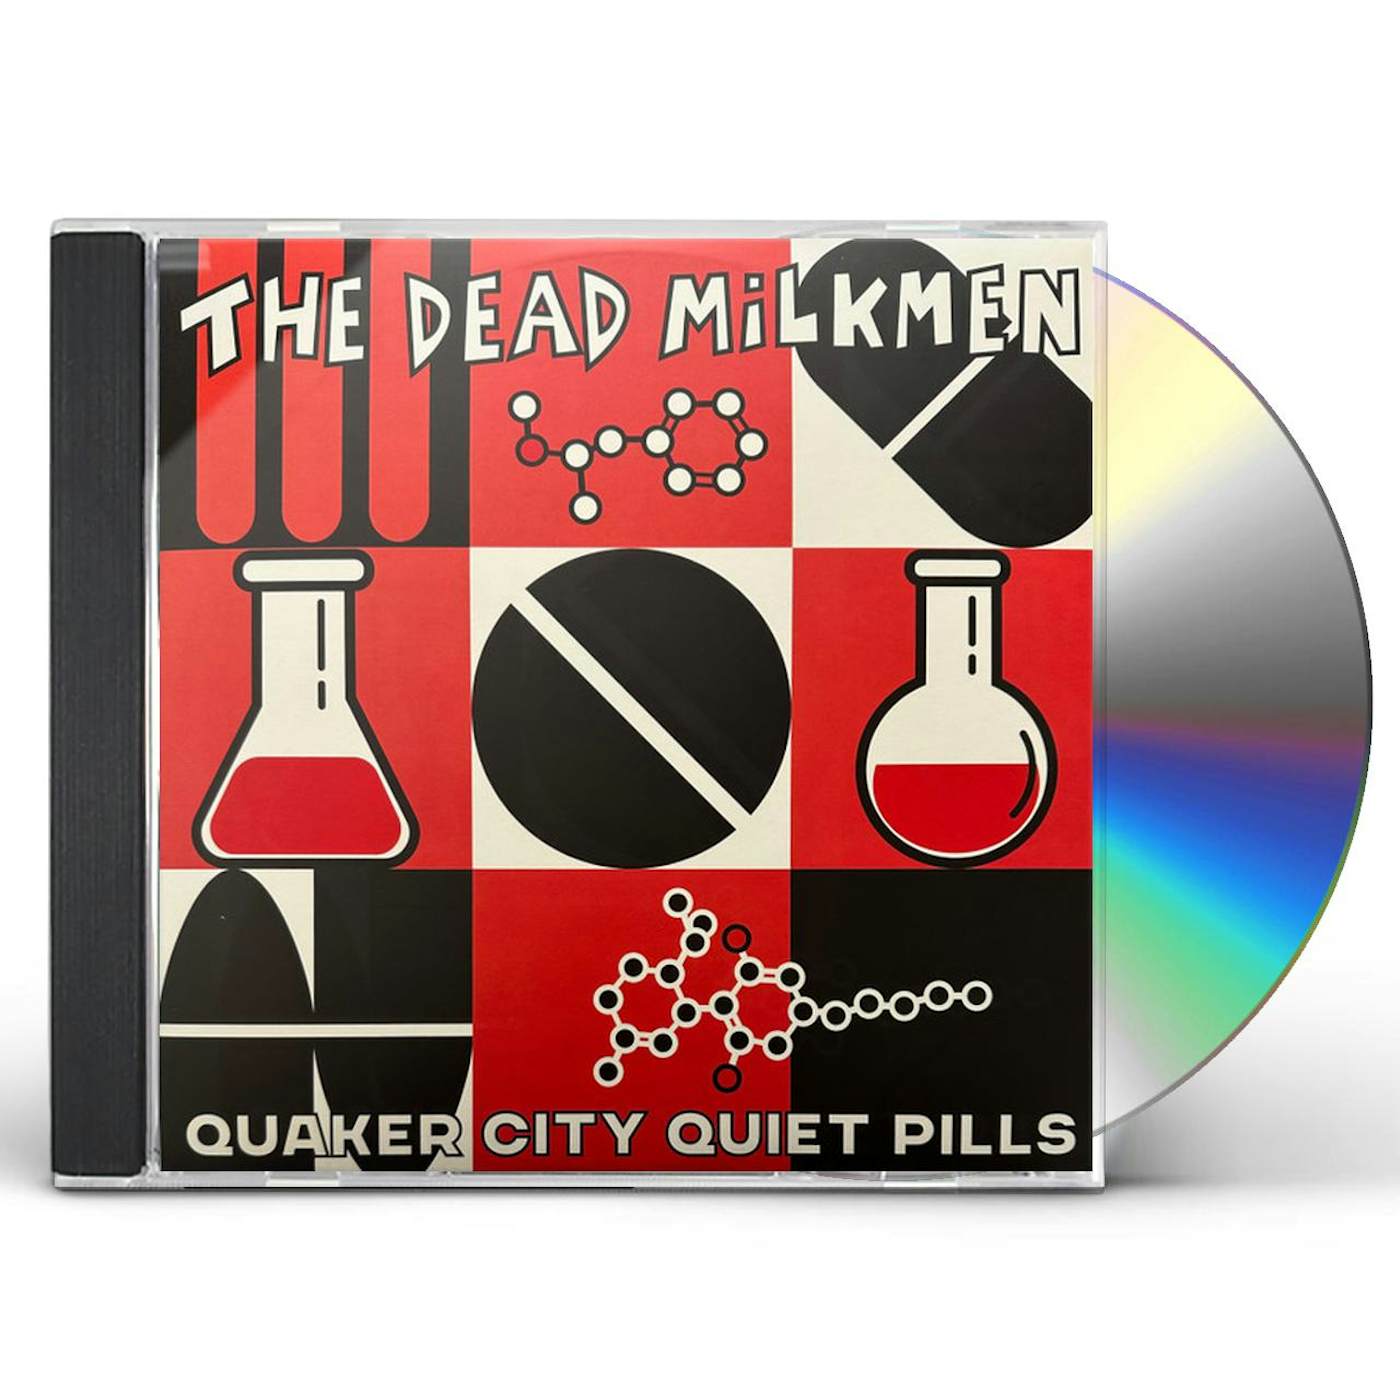 The Dead Milkmen QUAKER CITY QUIET PILLS CD